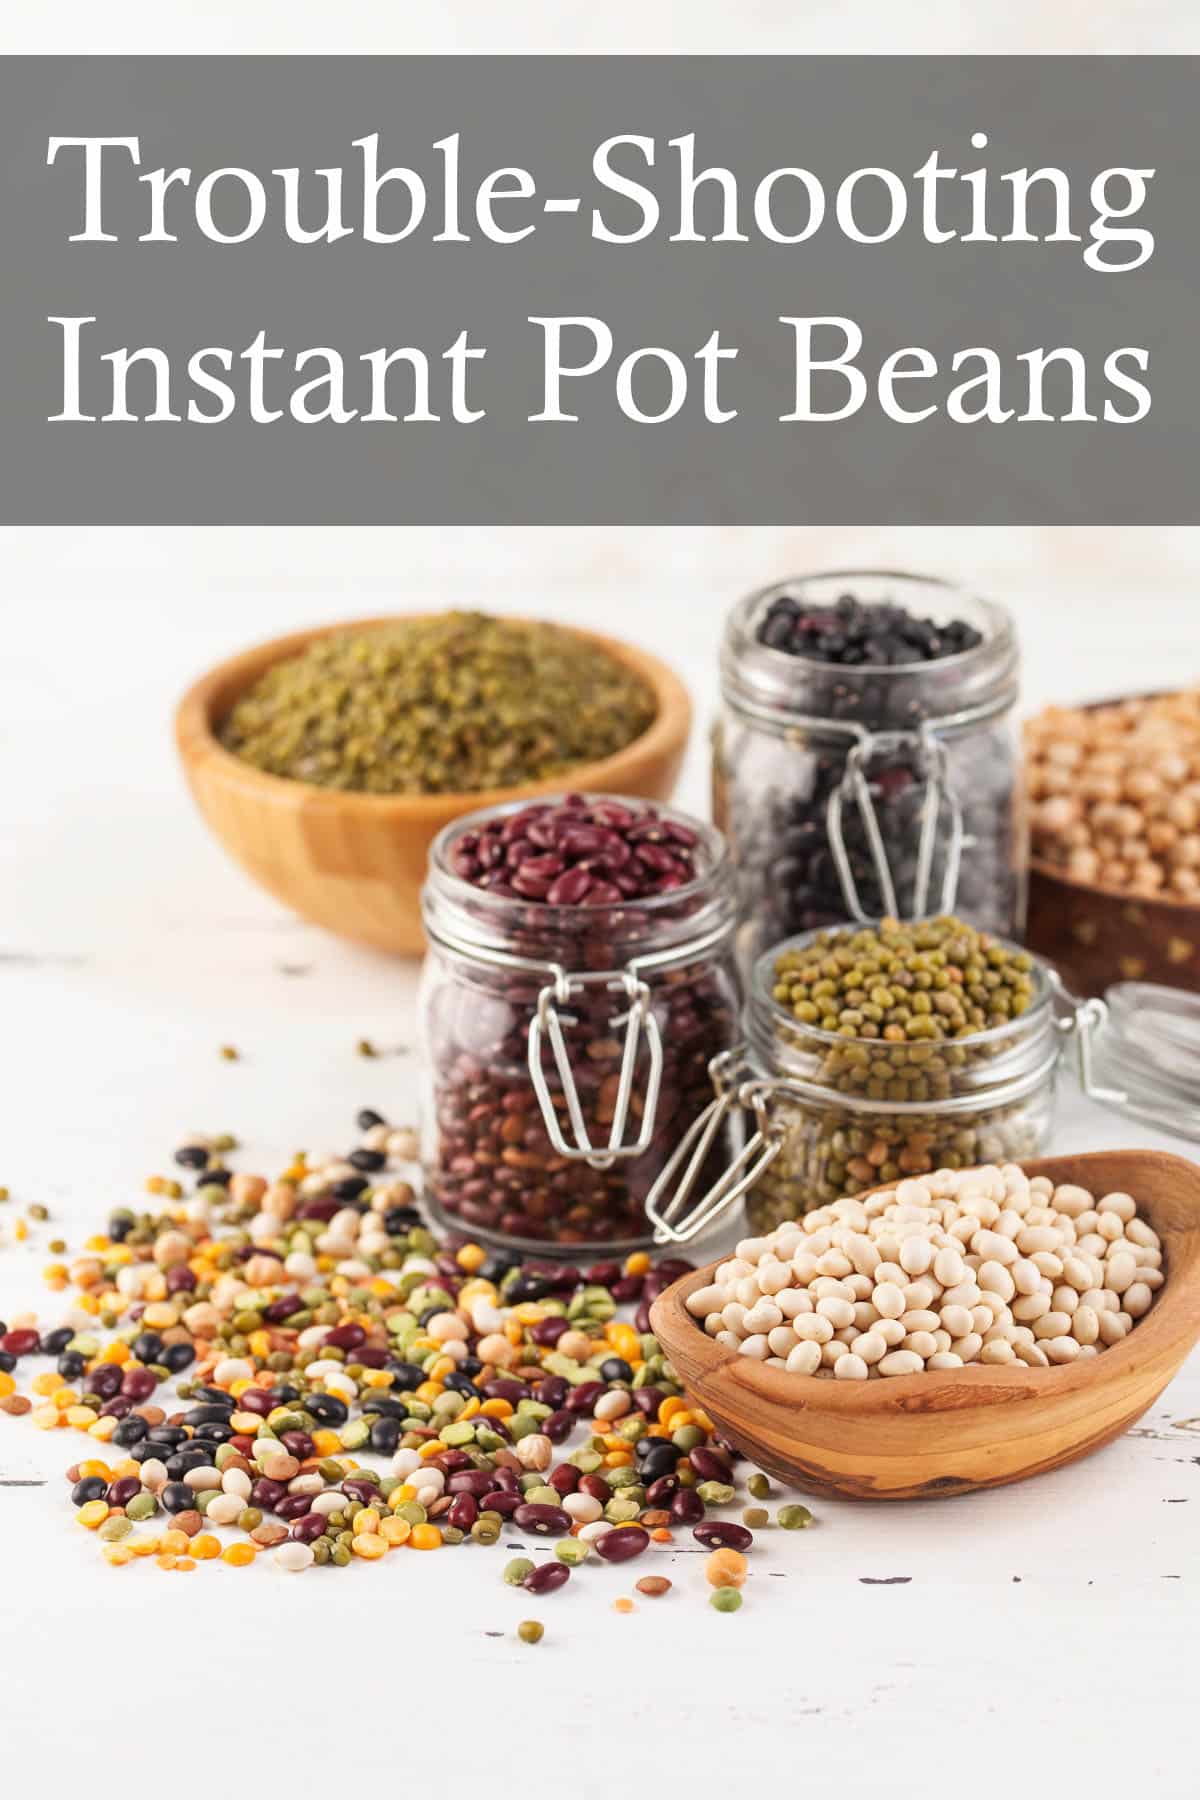 Trouble-Shooting Instant Pot Beans